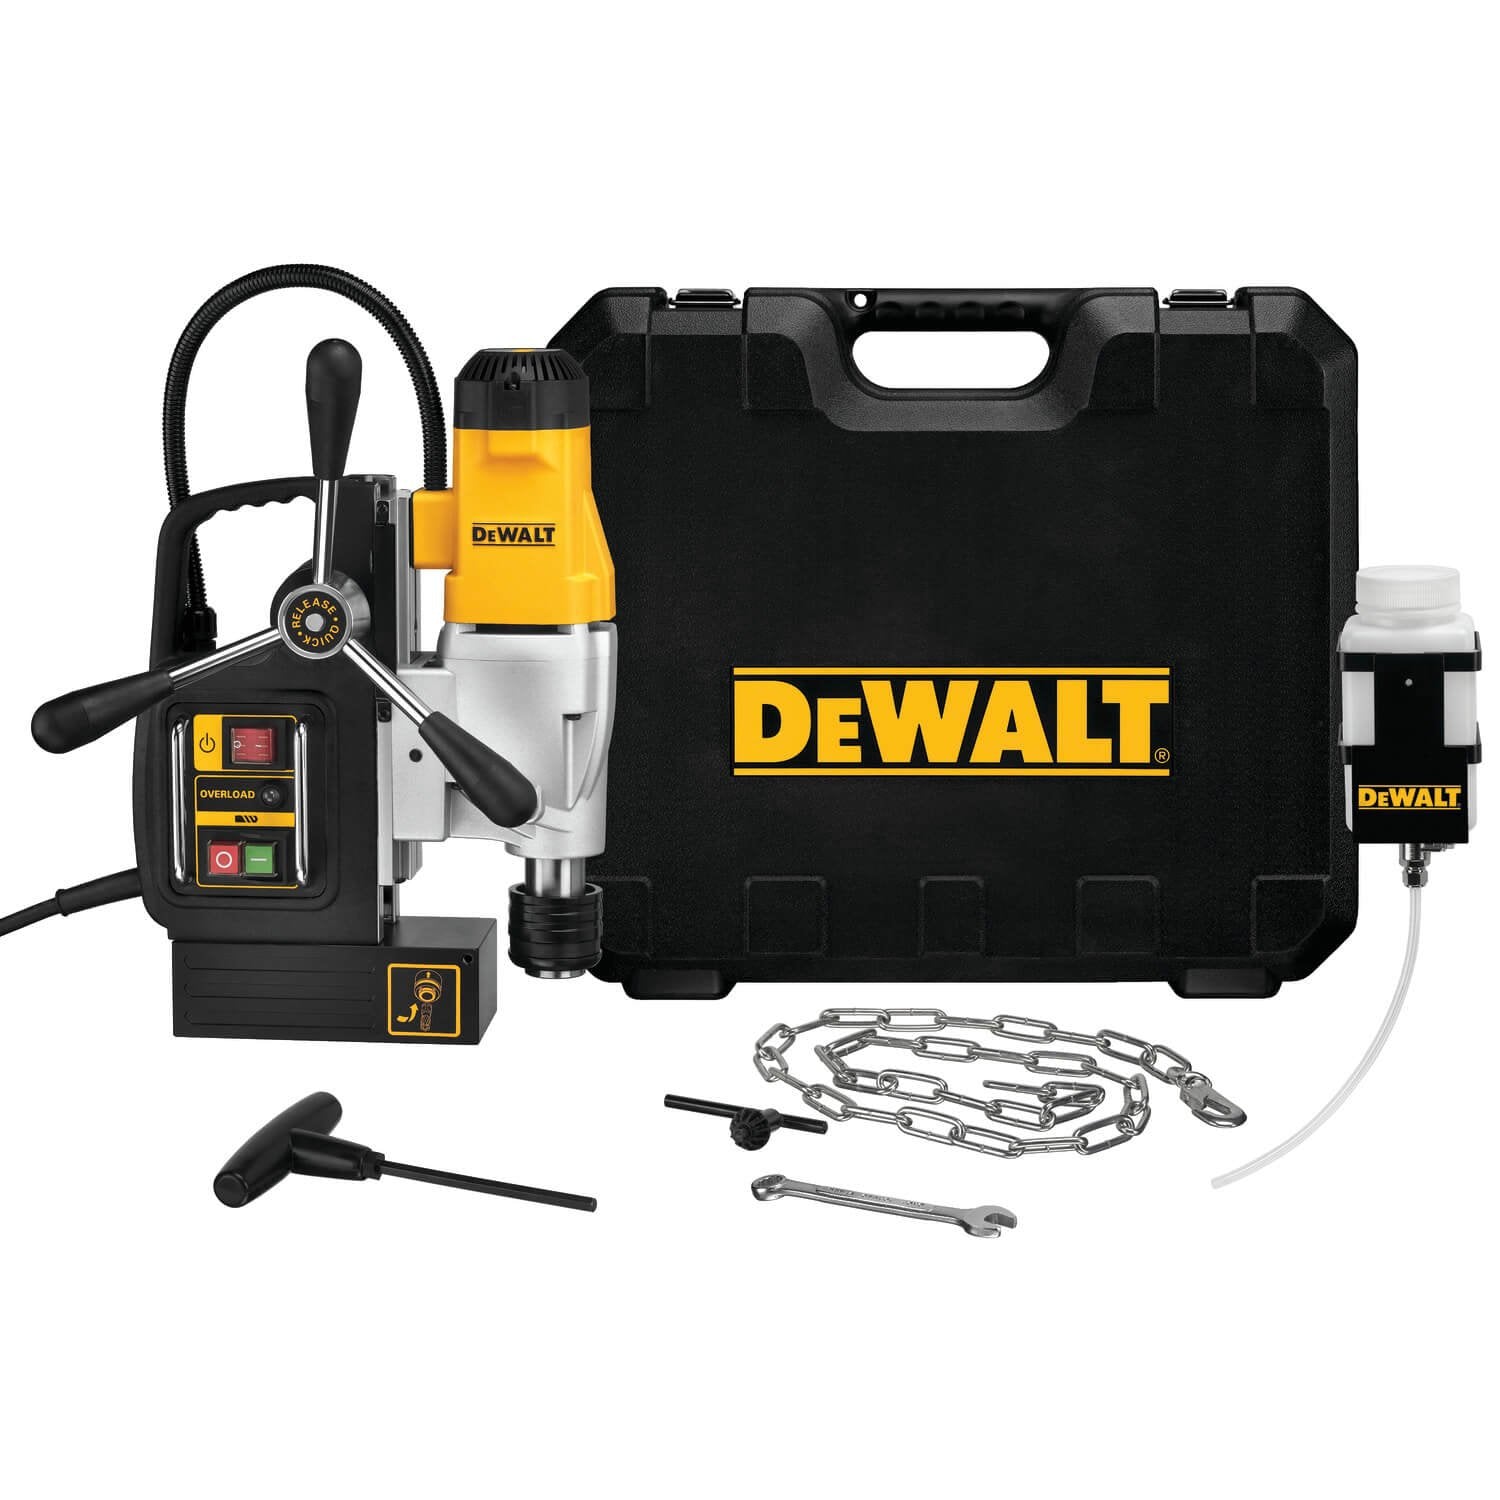 DEWALT DWE1622K 2-Speed Magnetic Drill Press, 2-Inch